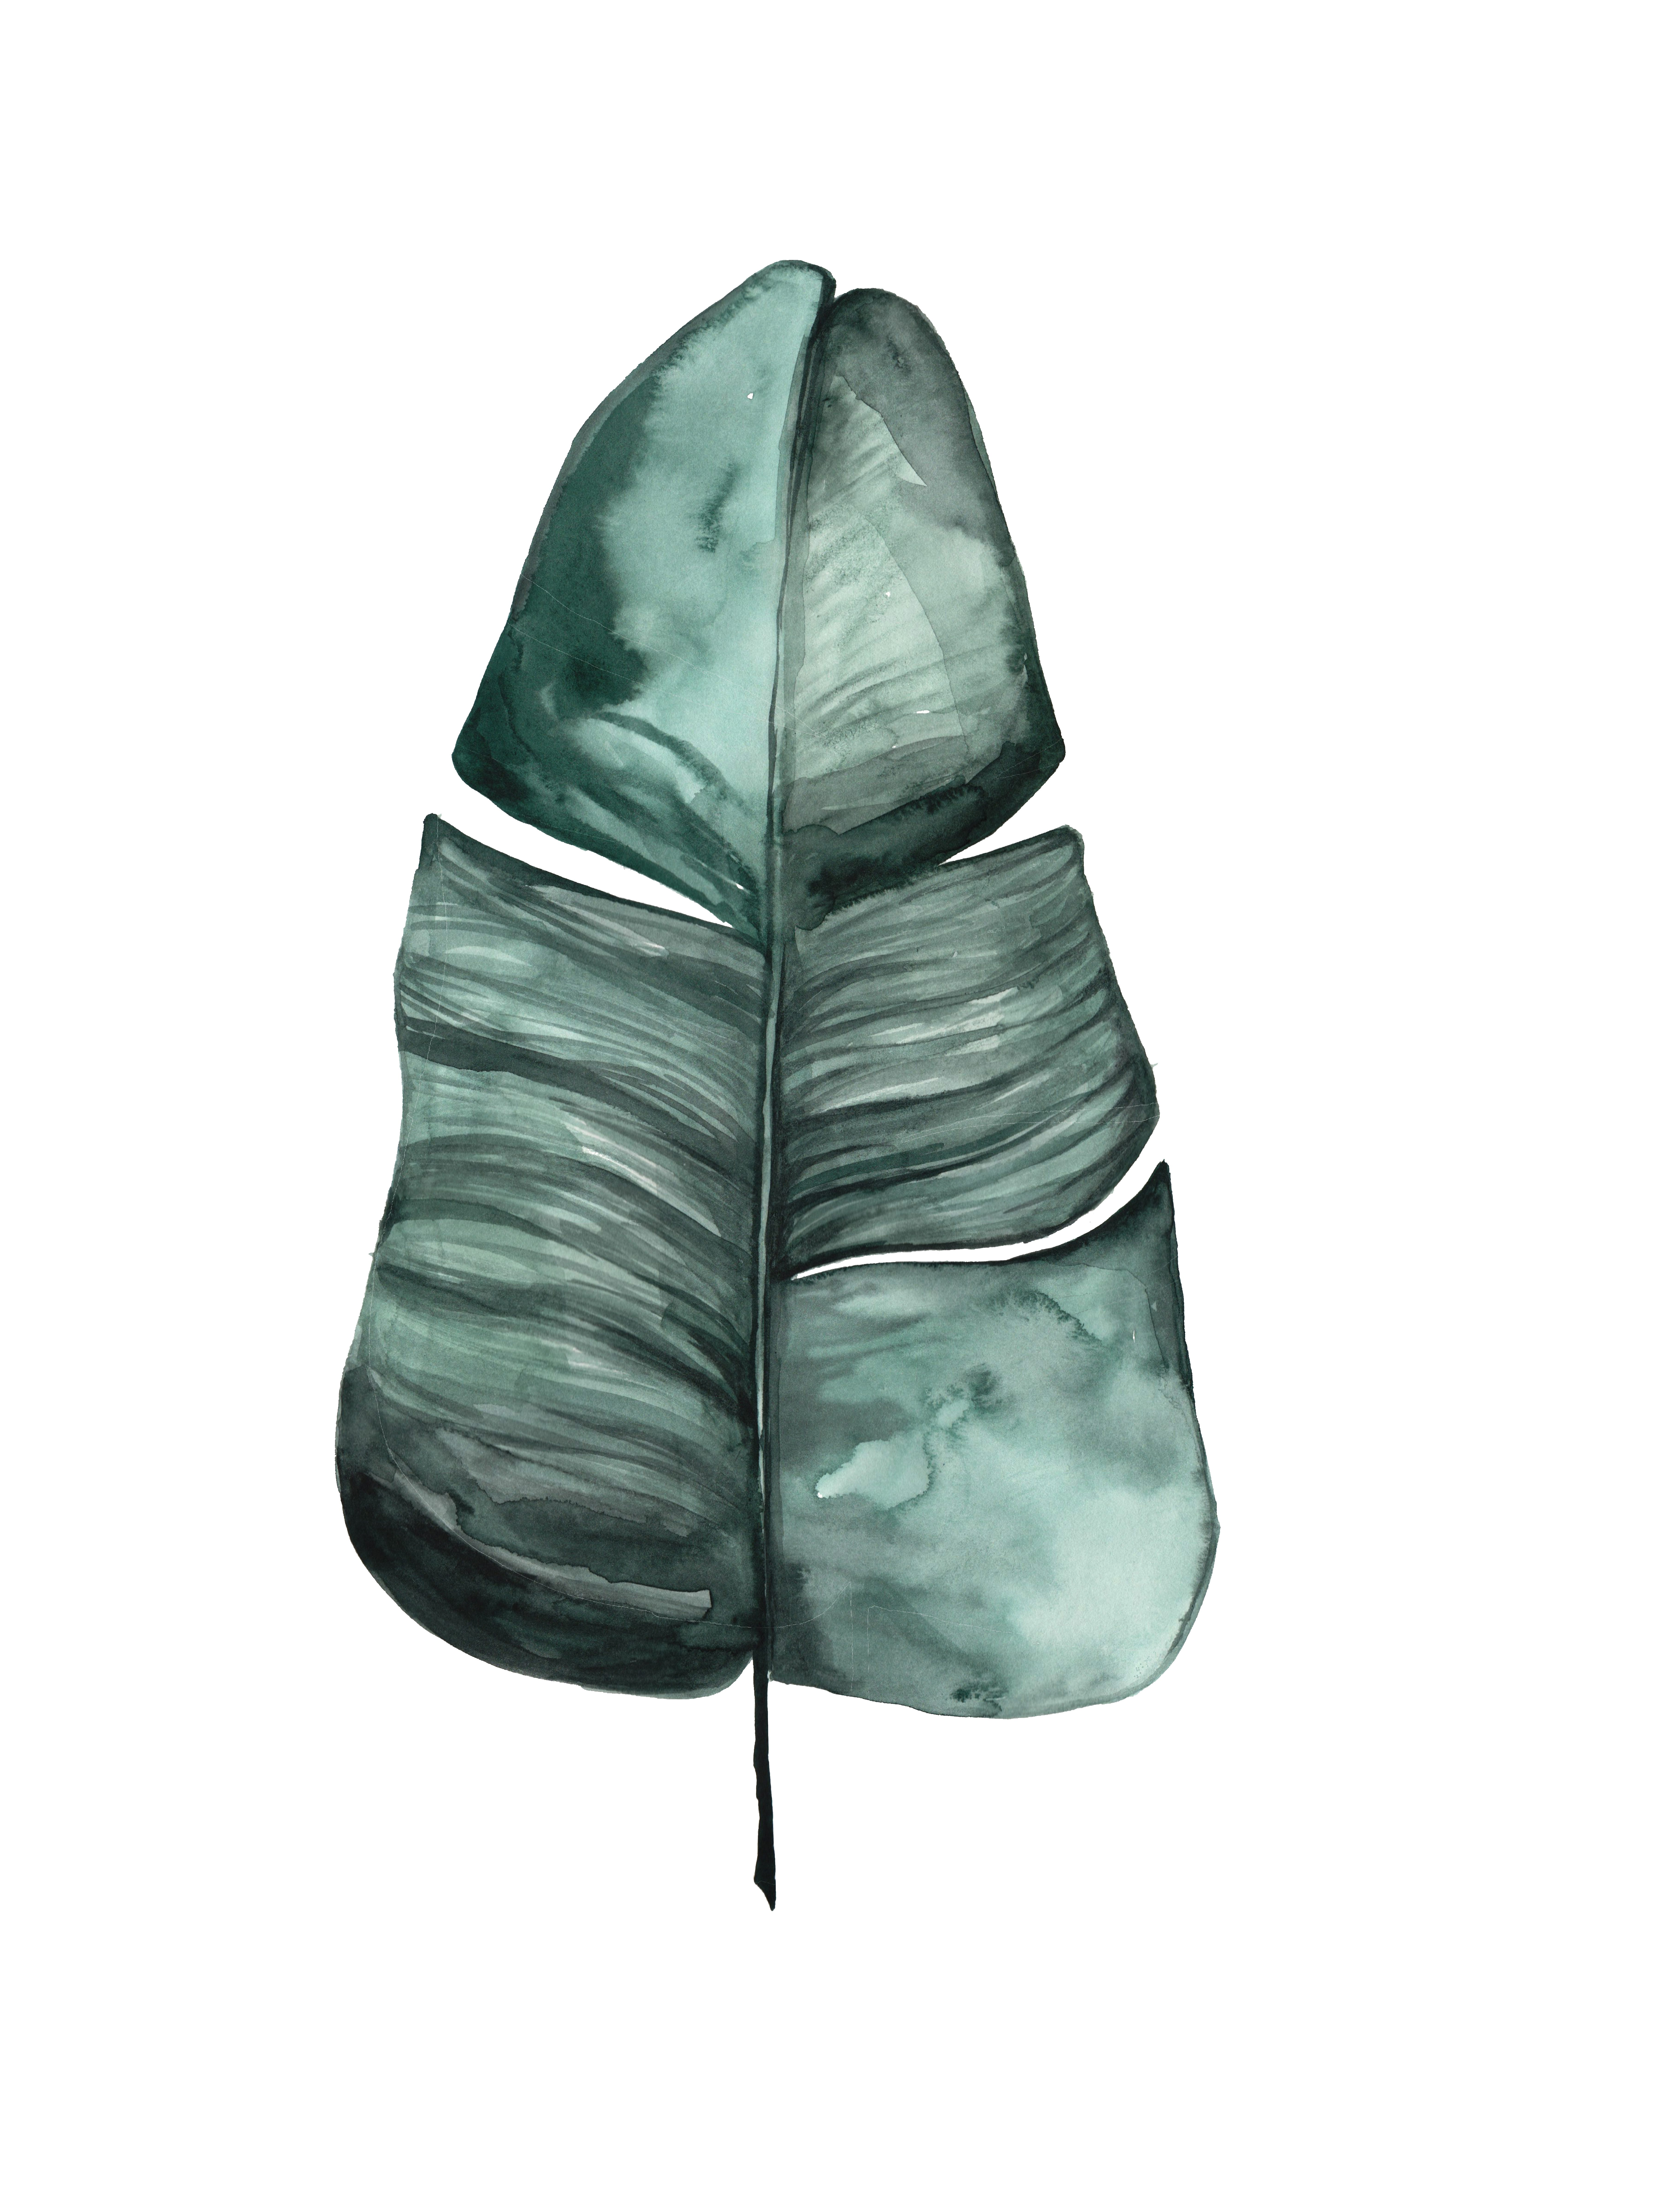 782-botanical-illustration---banana-leaf.jpg